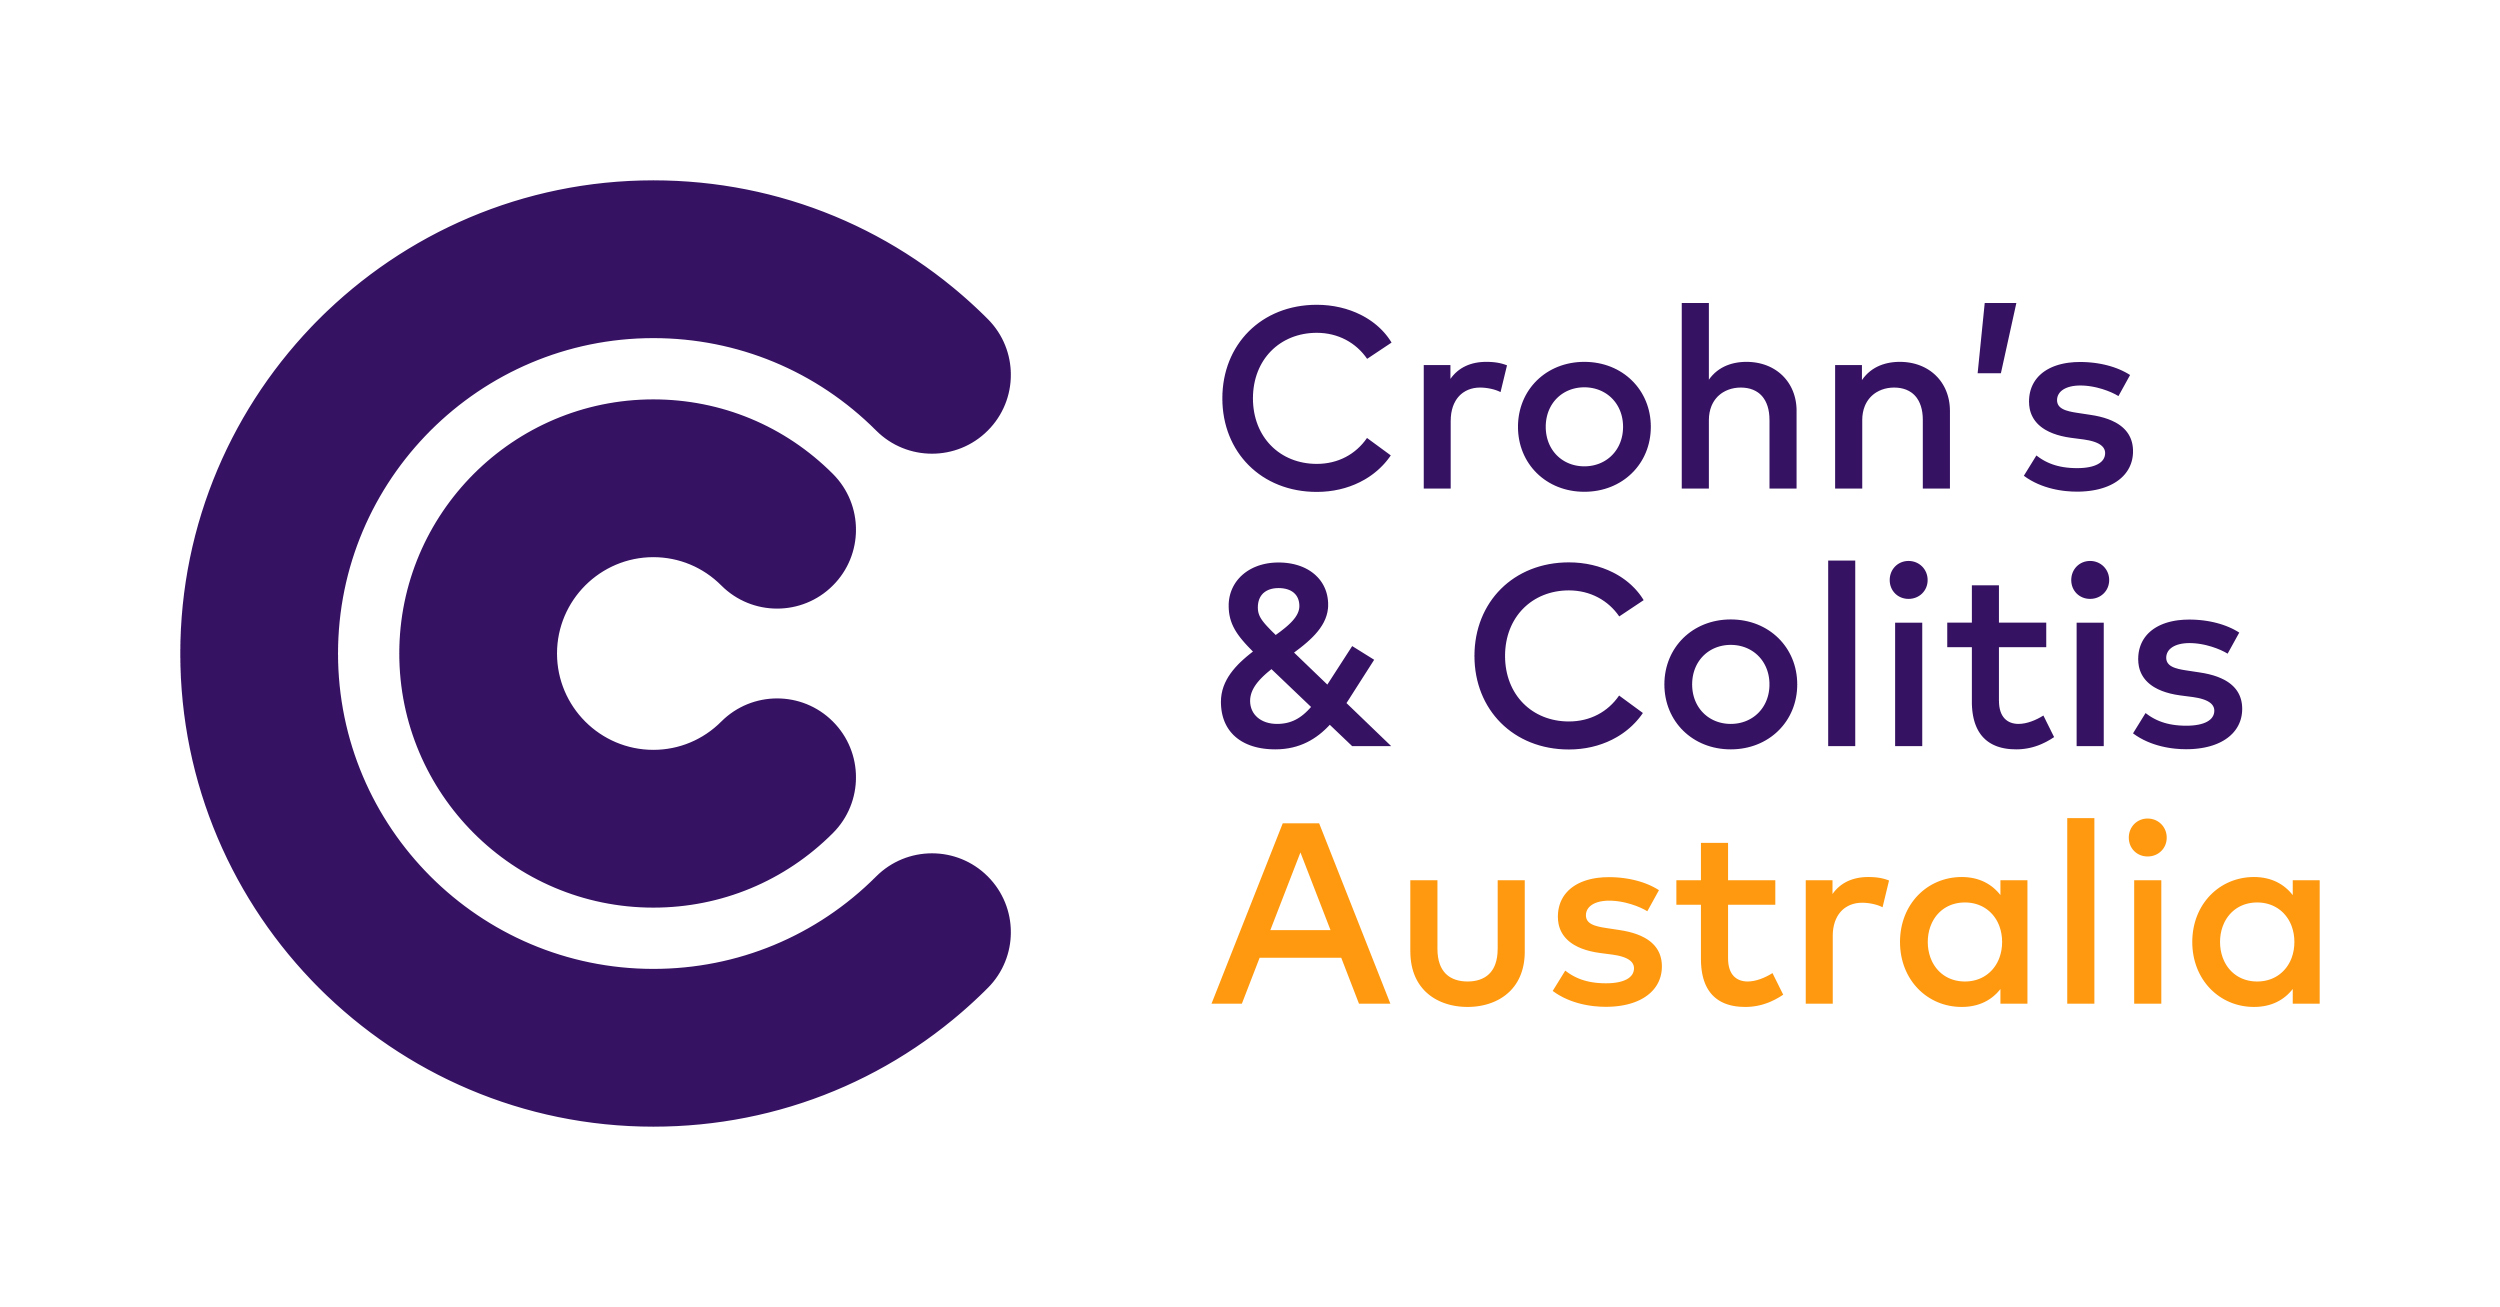 Crohns & Colitis Australia